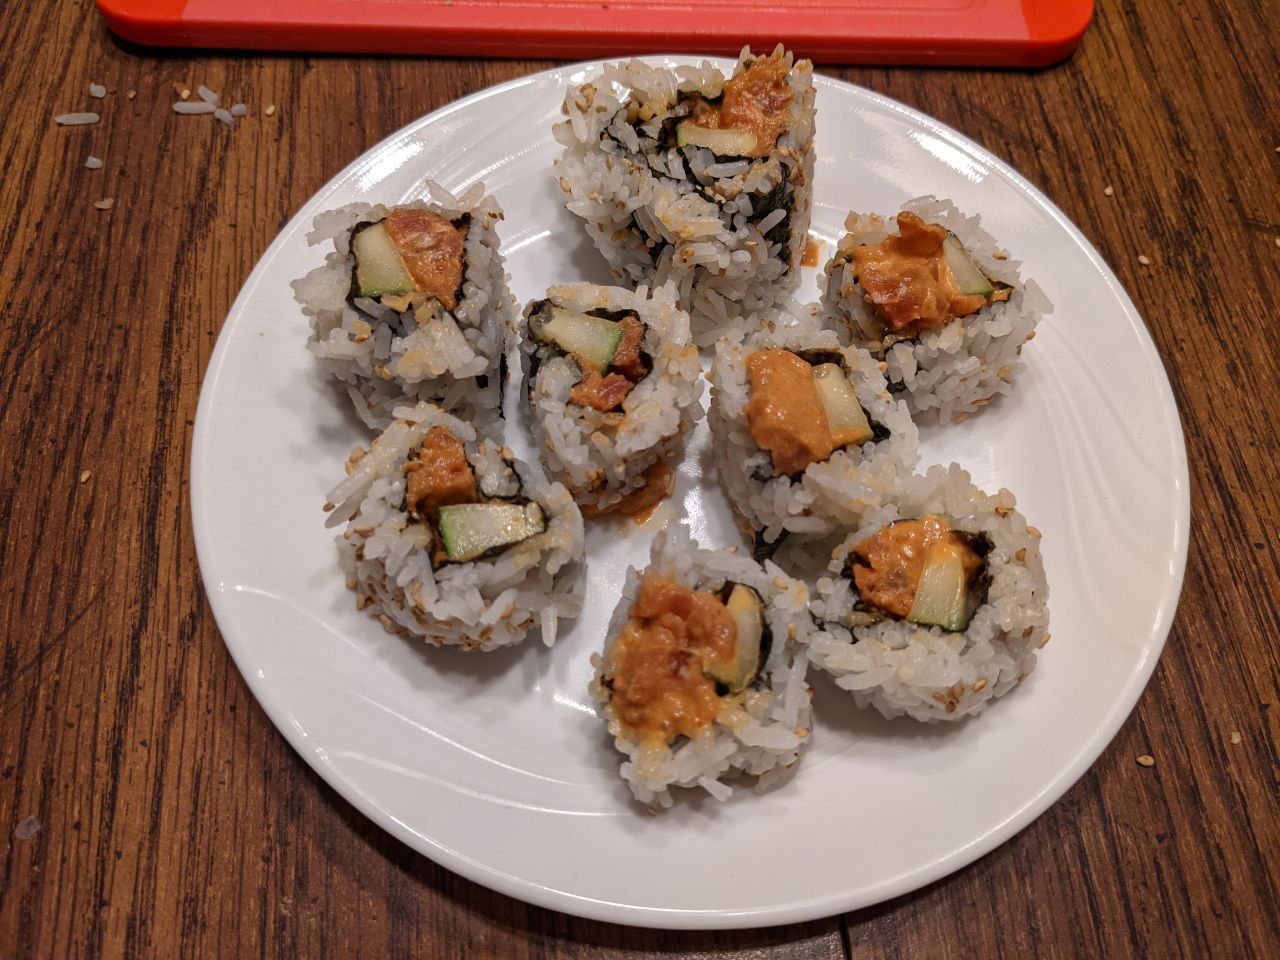 Spicy tuna rolls on a plate.